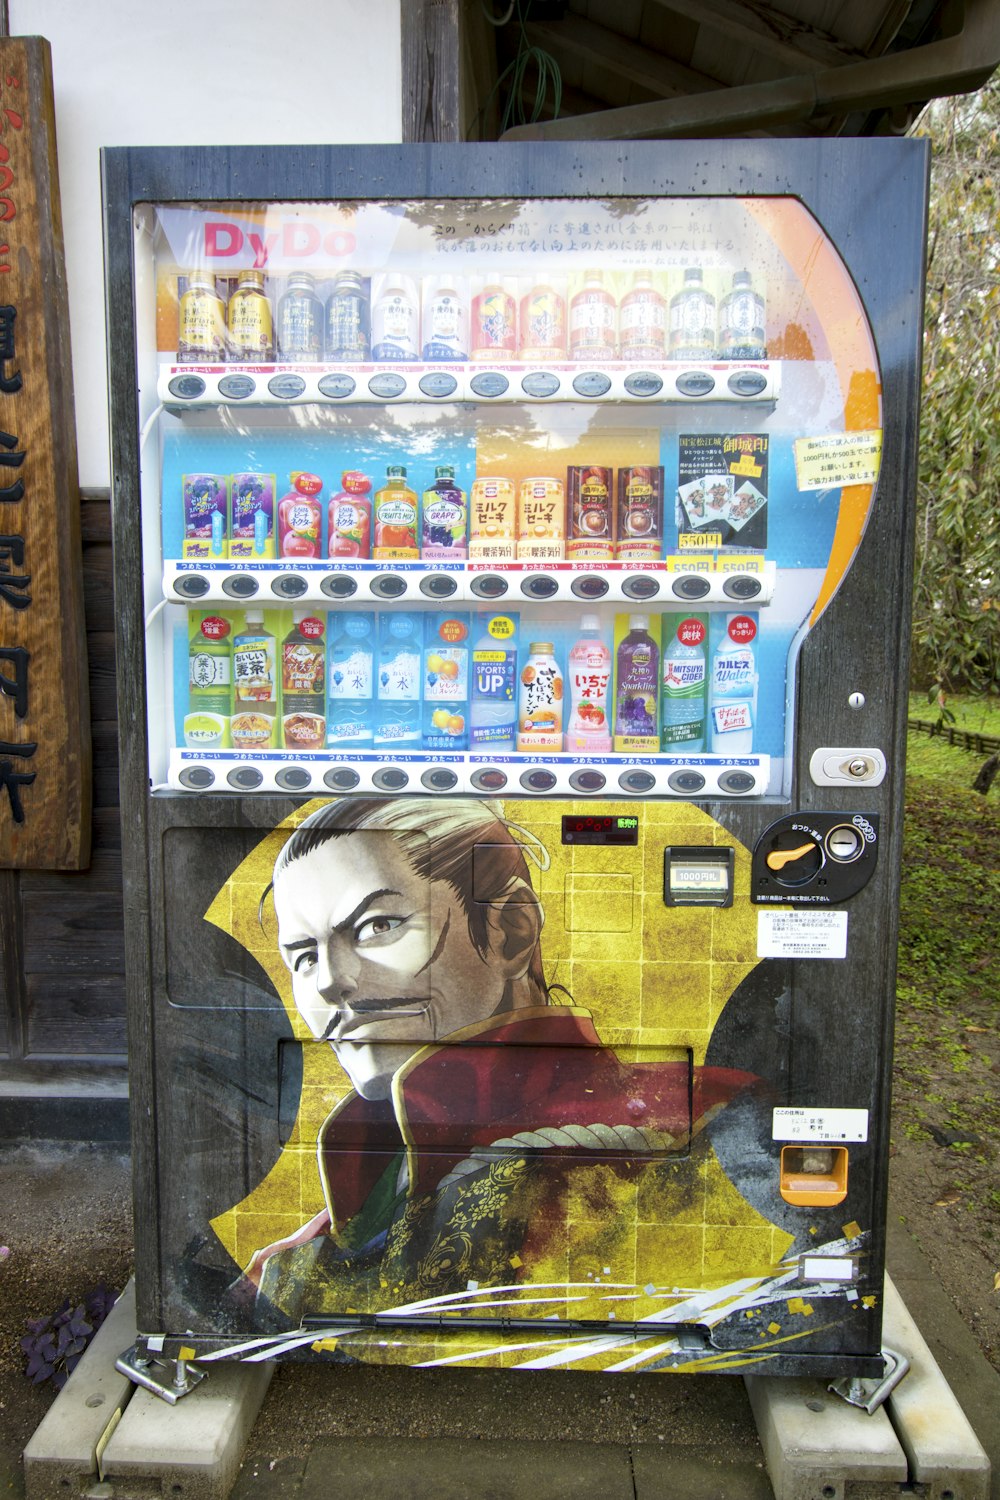 a vending machine with a cartoon